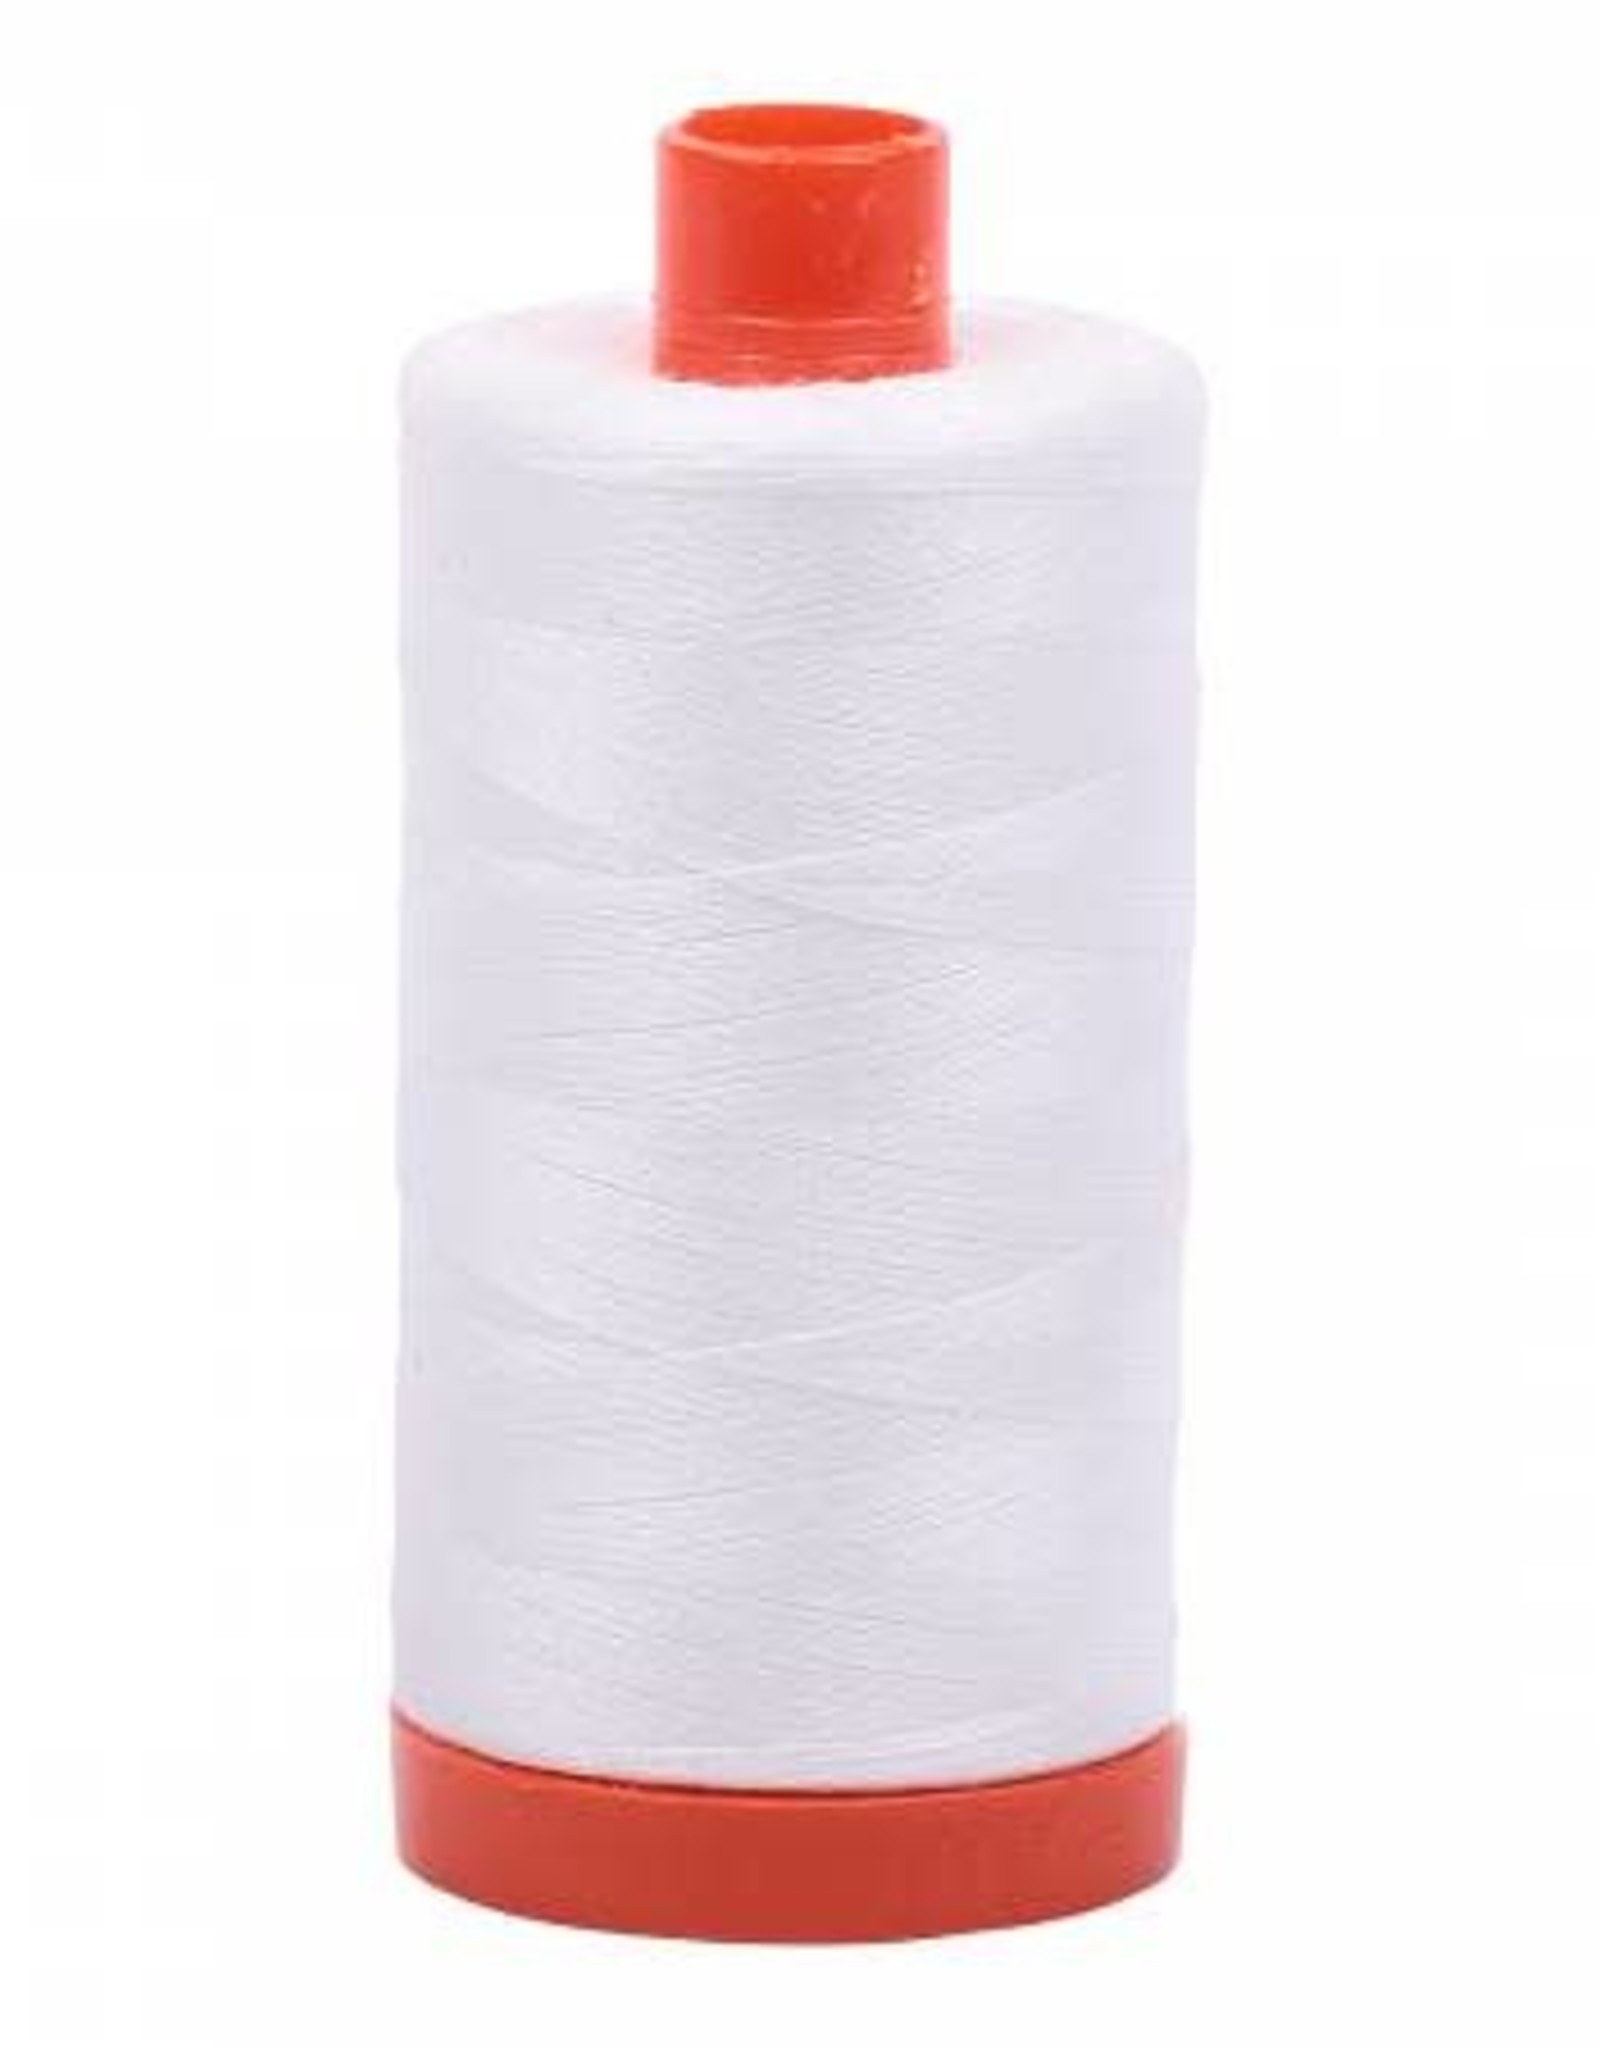 Mako Cotton Thread Solid 50wt - Natural White (2021)